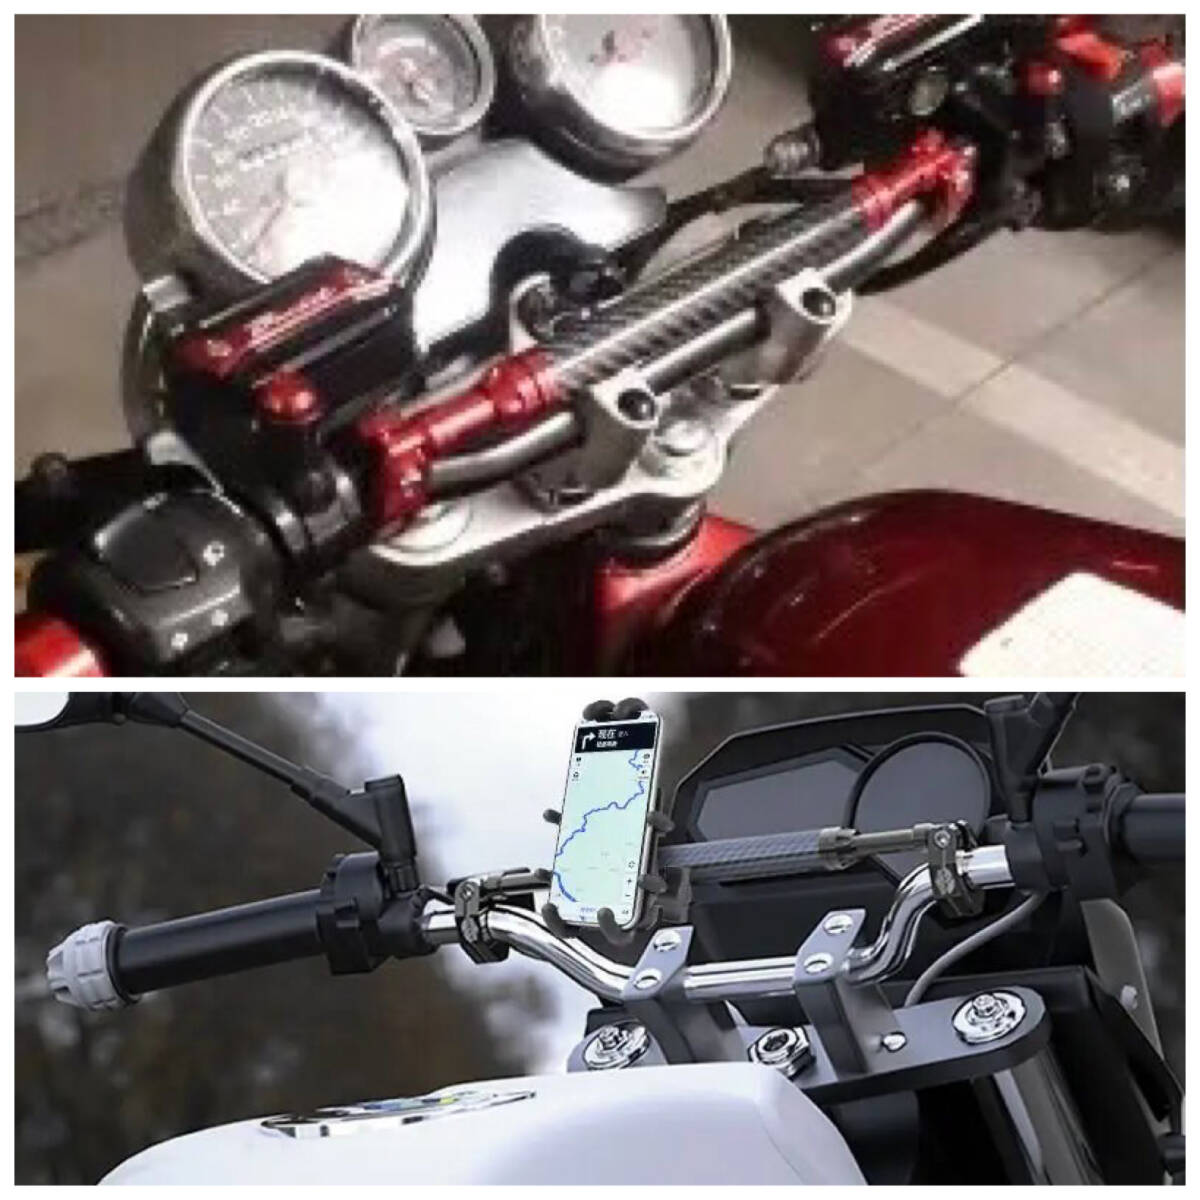  all-purpose bike steering wheel brace carbon style × gunmetal handlebar Honda Yamaha Suzuki Kawasaki Bick scooter Harley Monkey 